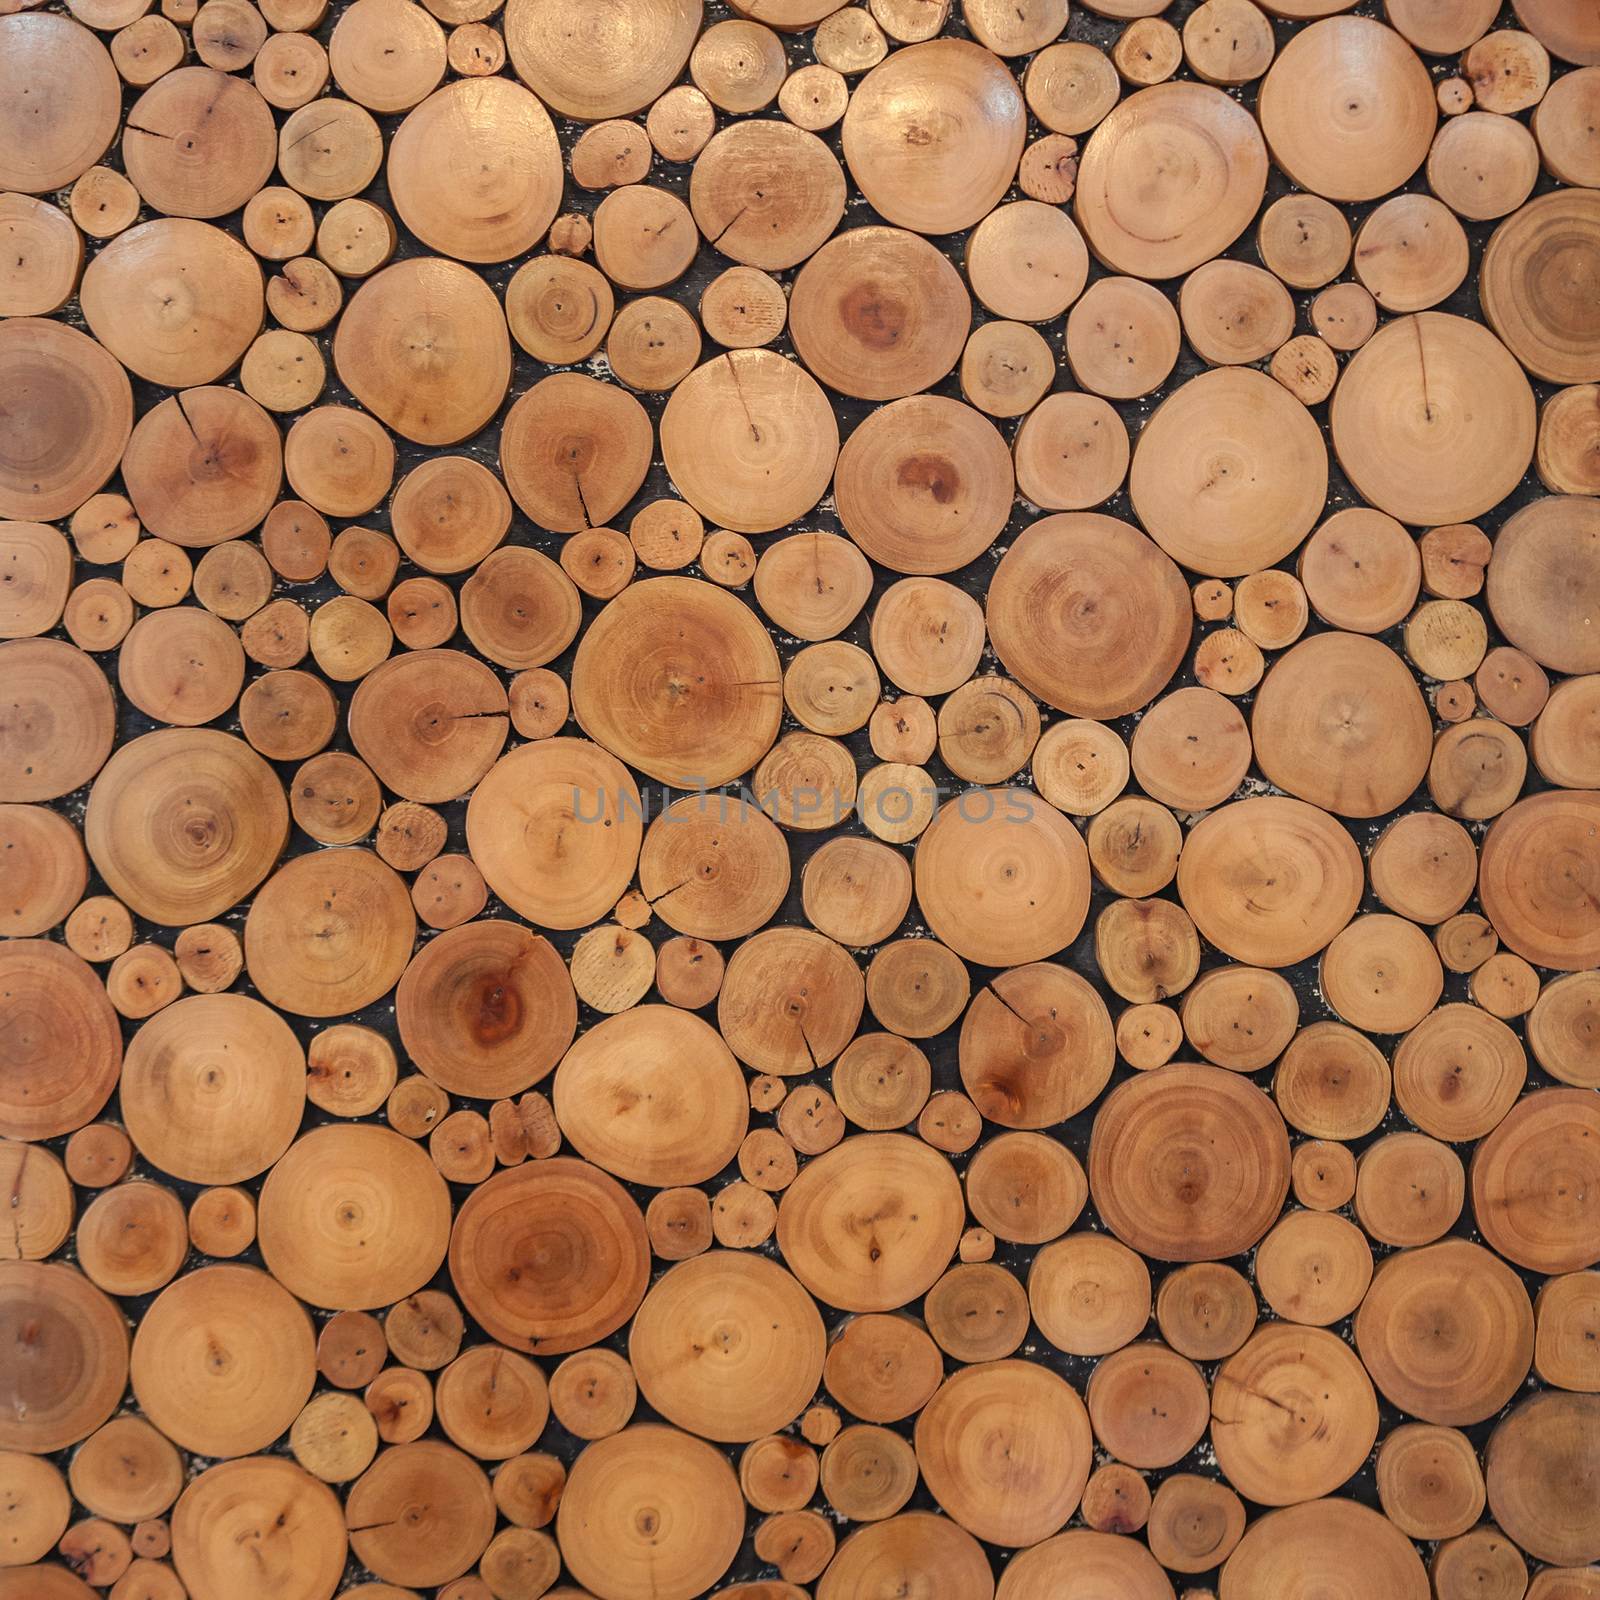 tree wood brown circle stumps as background